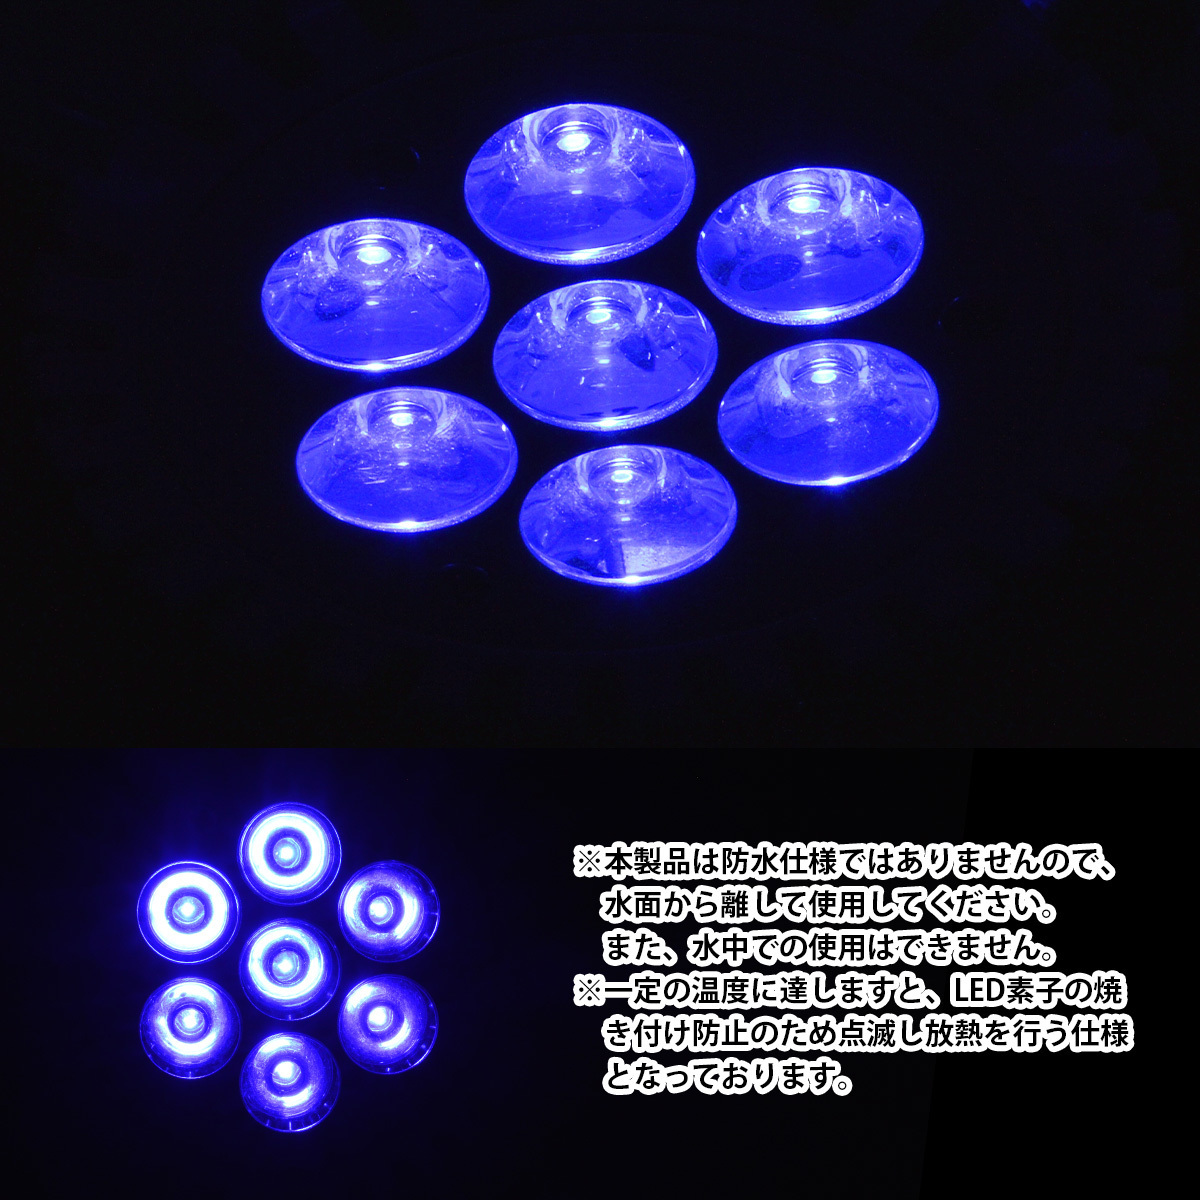 LED 電球 スポットライト 7W 青6 水槽 照明 E26 観賞育成用 LEDスポットライト 電気 水草 サンゴ 熱帯魚 観賞魚 植物育成_画像4